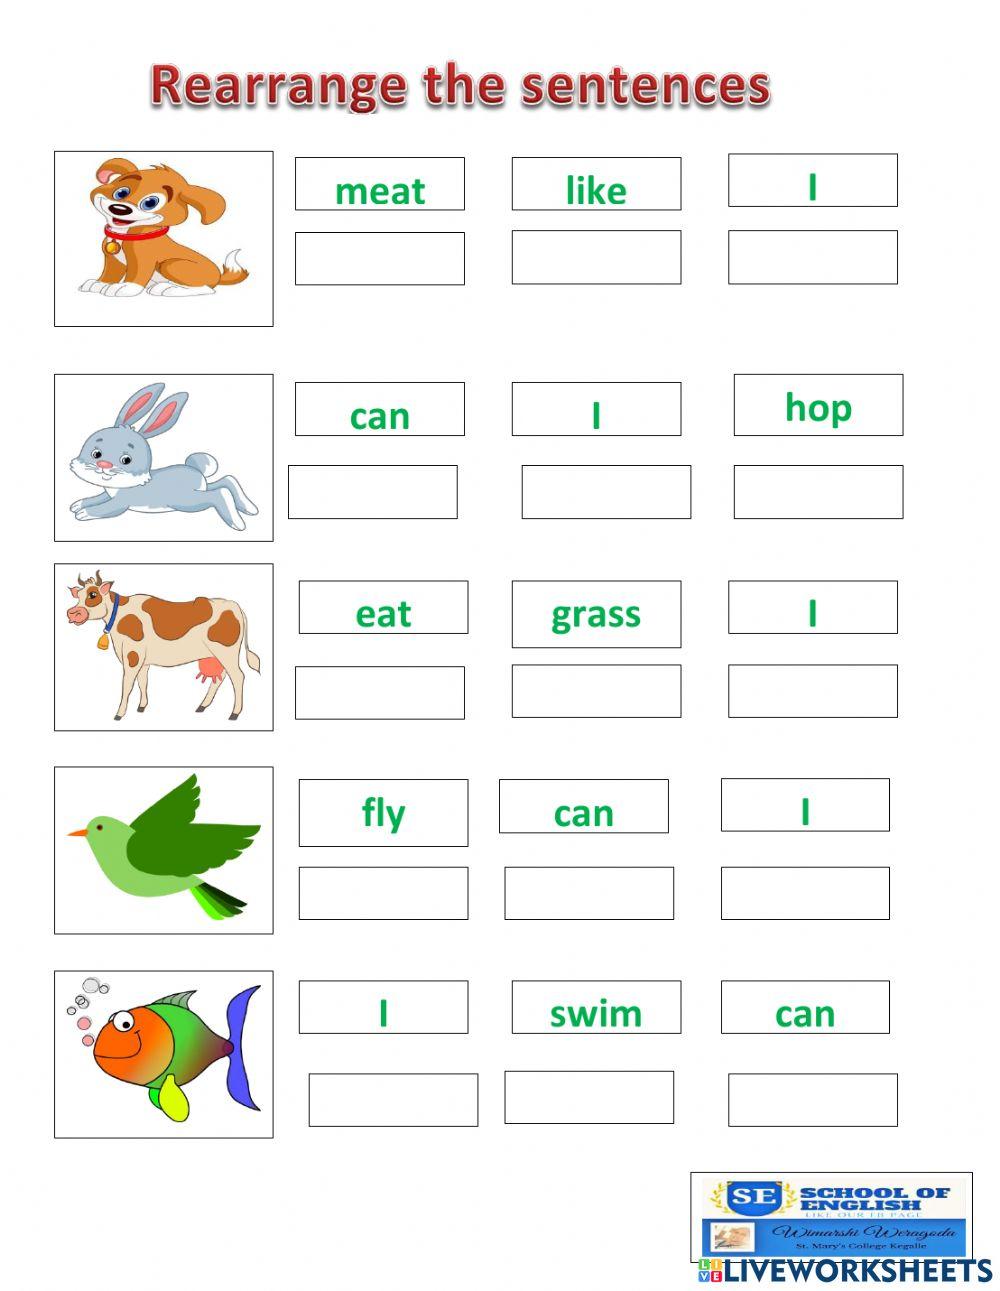 Rearrange the sentences interactive worksheet | Live Worksheets